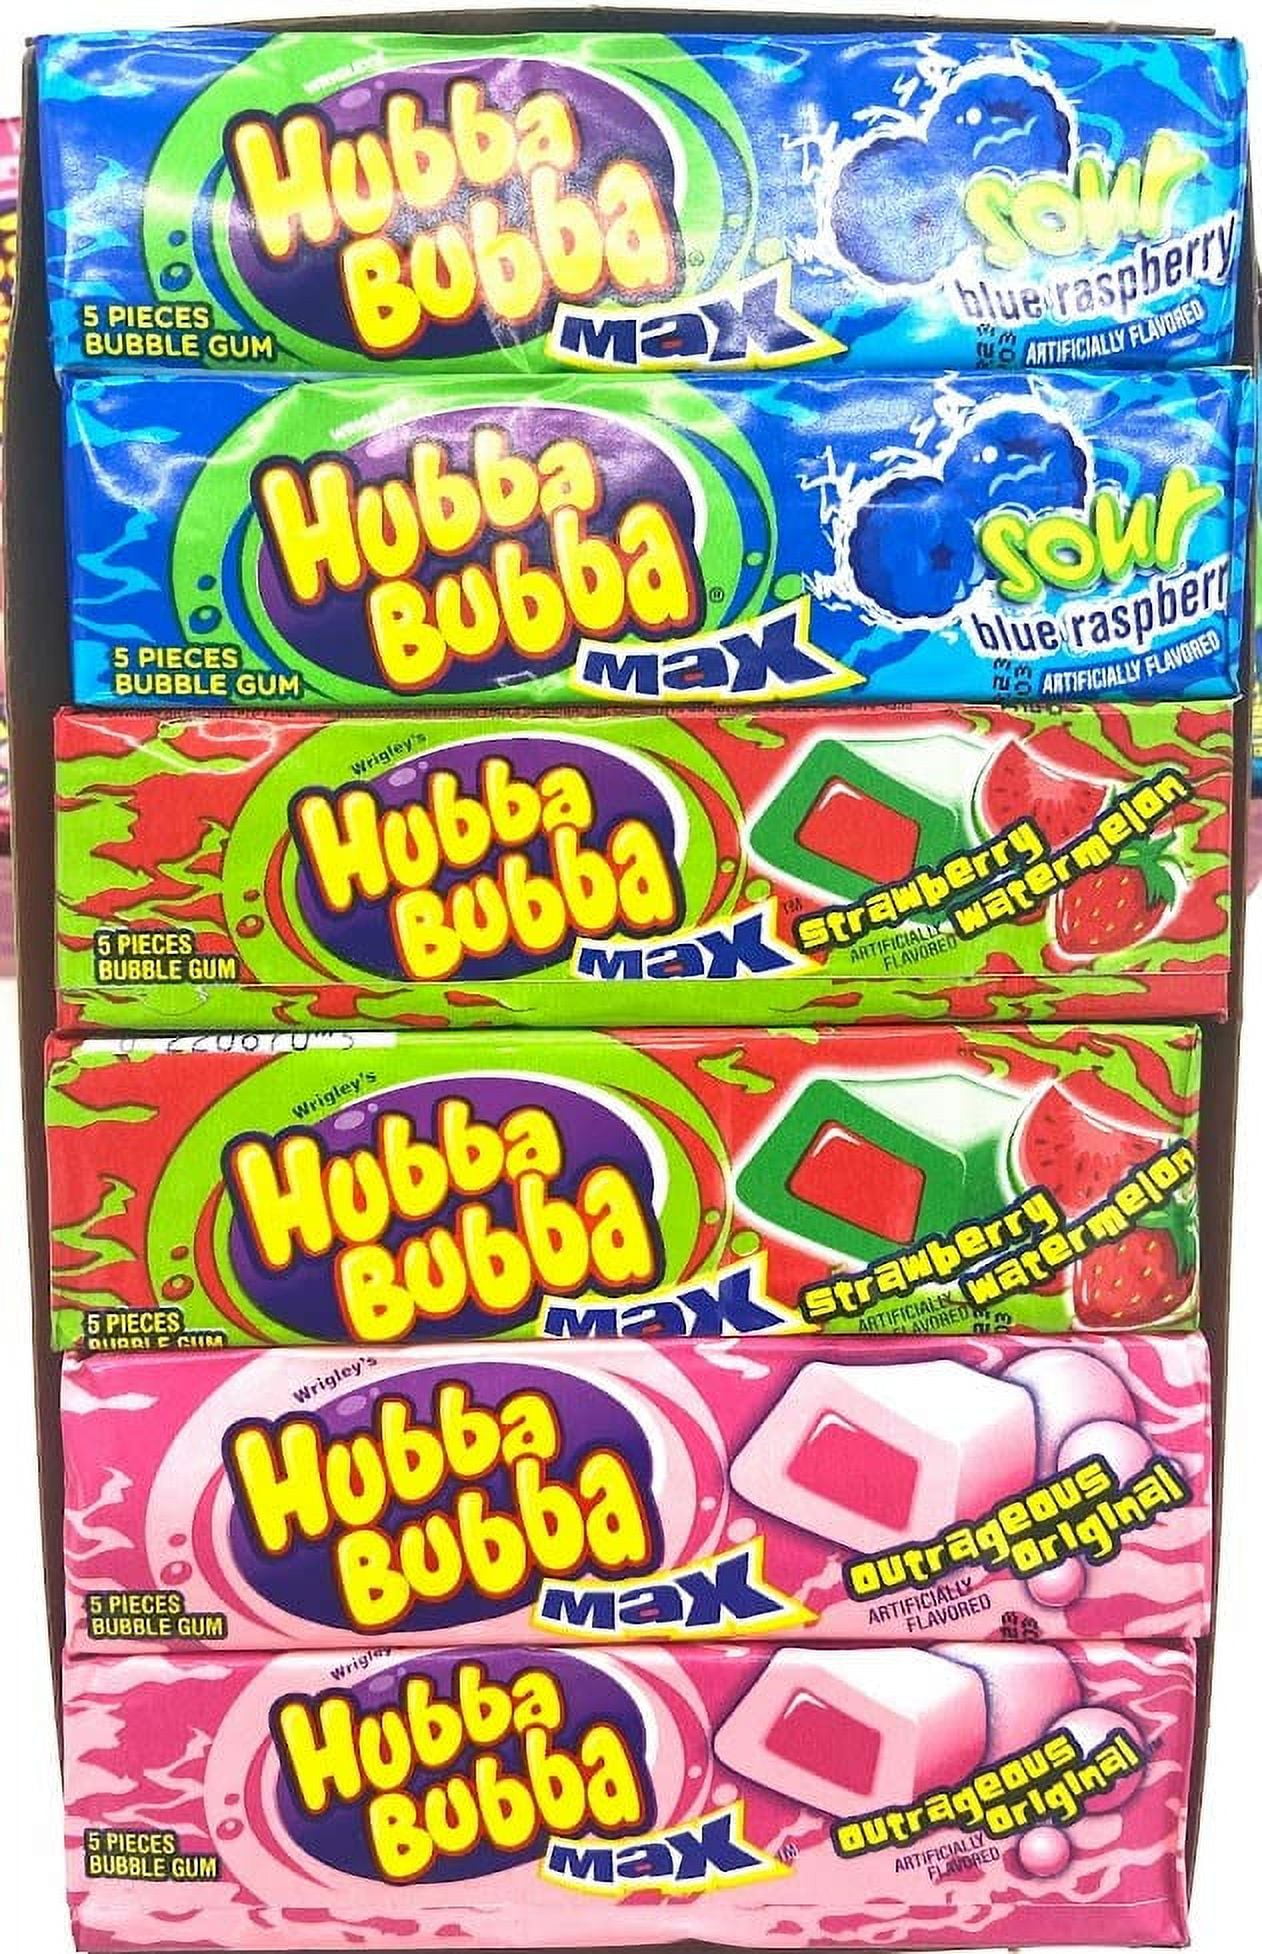  Hubba Bubba Chewing Gum Tape Roll, 2 Flavor Variety (3) each:  Original Bubble Gum, Sour Blue Raspberry (2 Ounces)